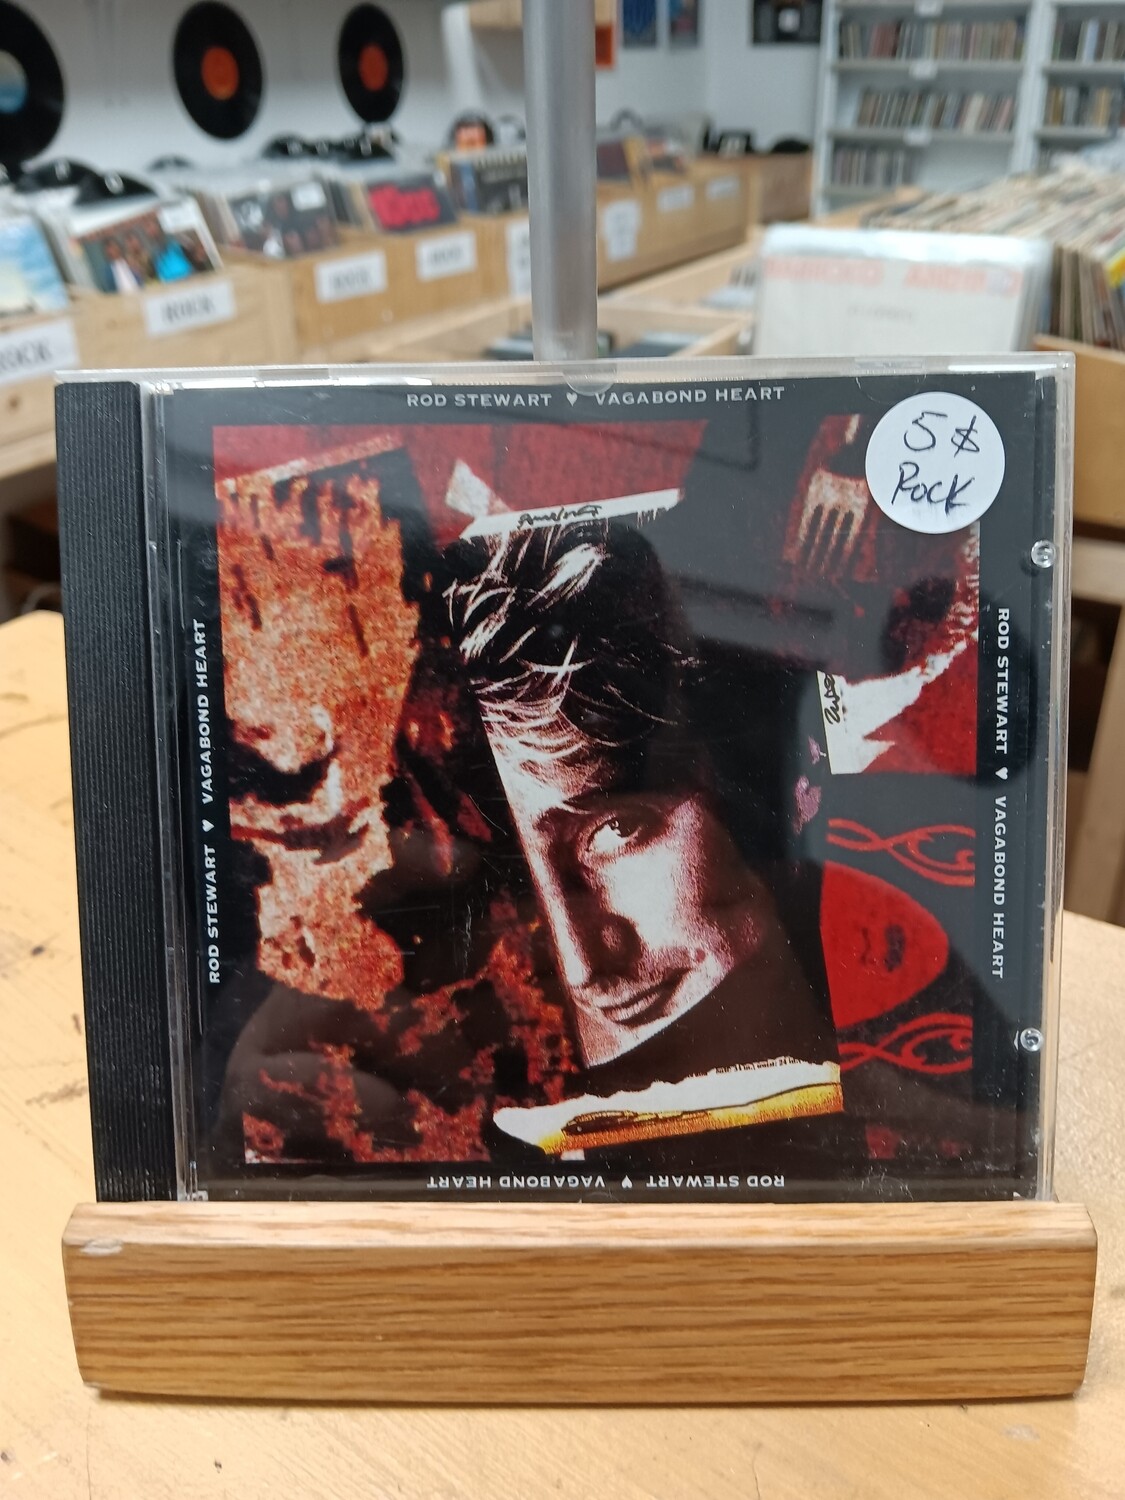 Rod Stewart - Vagabond heart (CD)